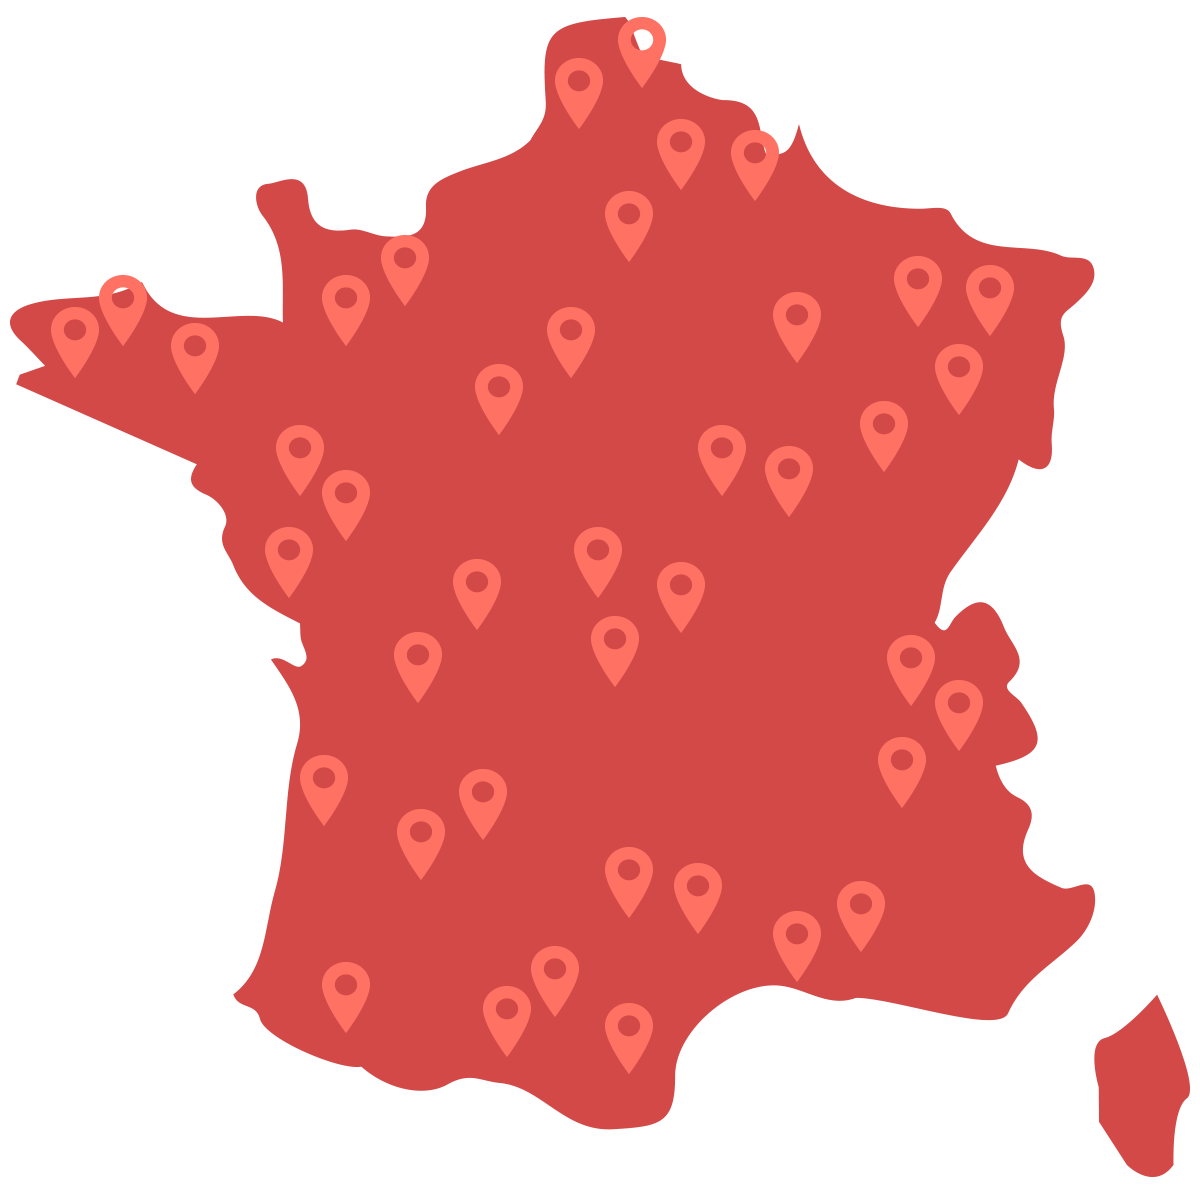 French map shopopop